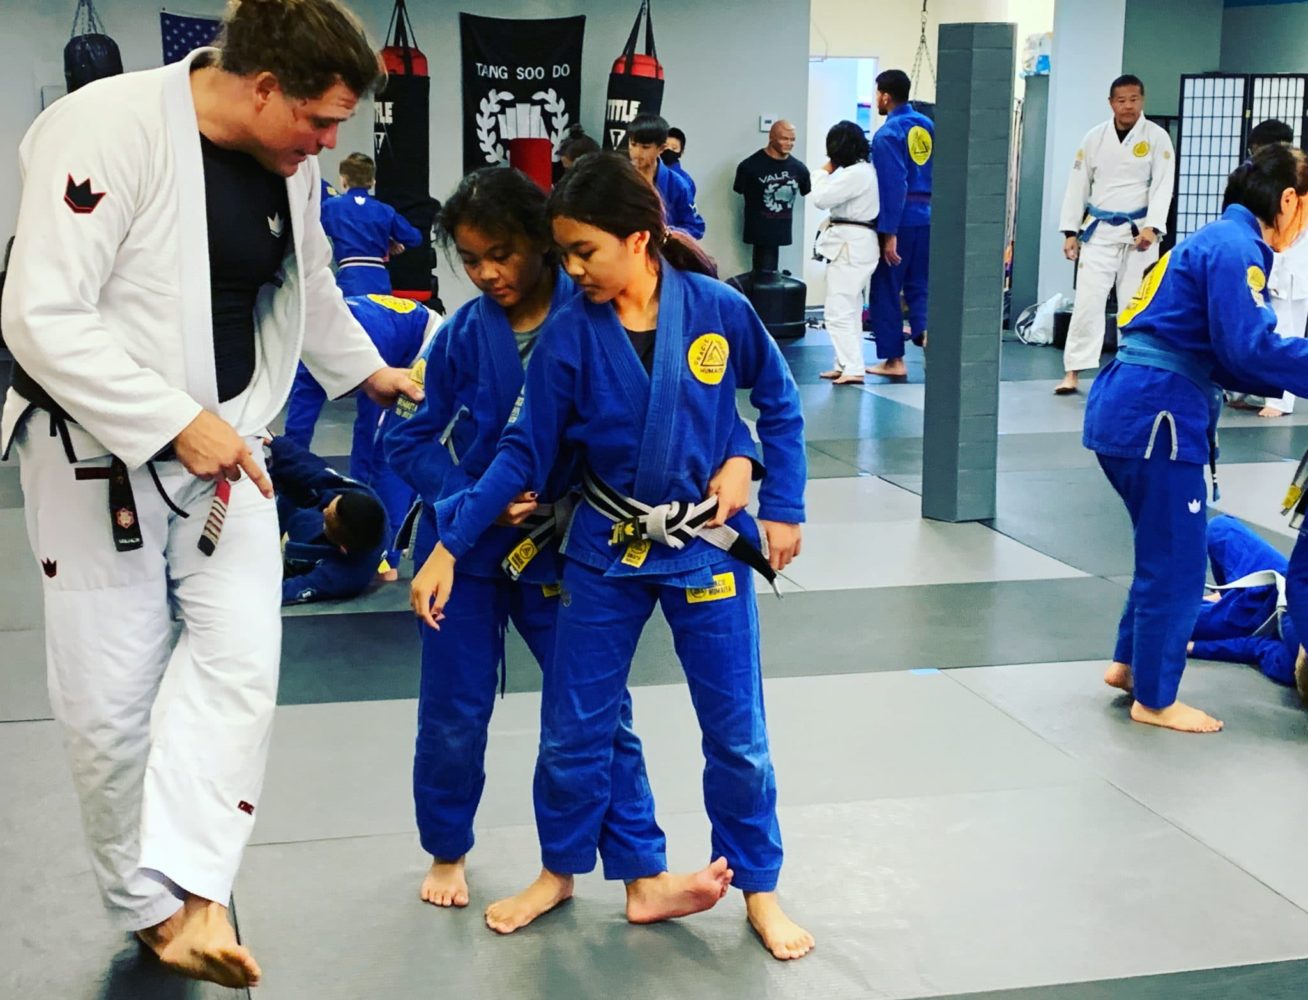 Seven Spears Martial Arts Academy Brazilian Jiu Jitsu